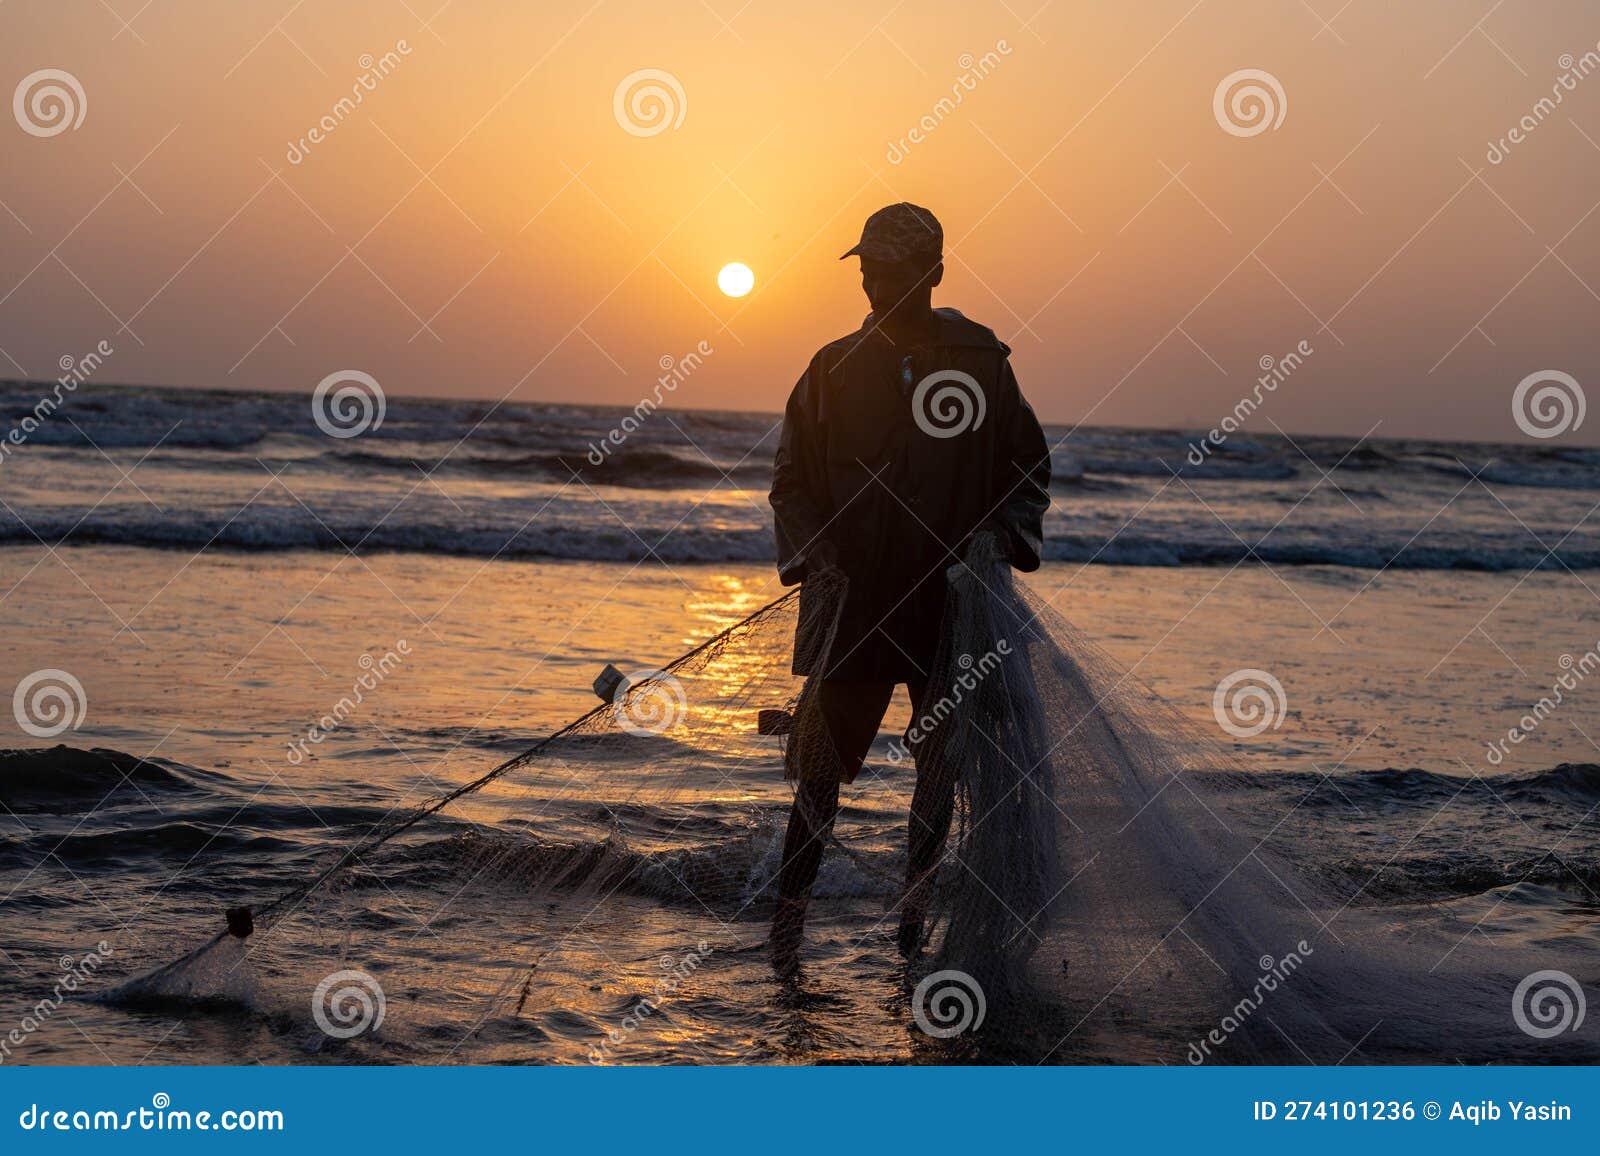 https://thumbs.dreamstime.com/z/fisherman-preparing-fishing-net-karachi-pakistan-pulling-to-catch-fish-sea-view-evening-time-274101236.jpg